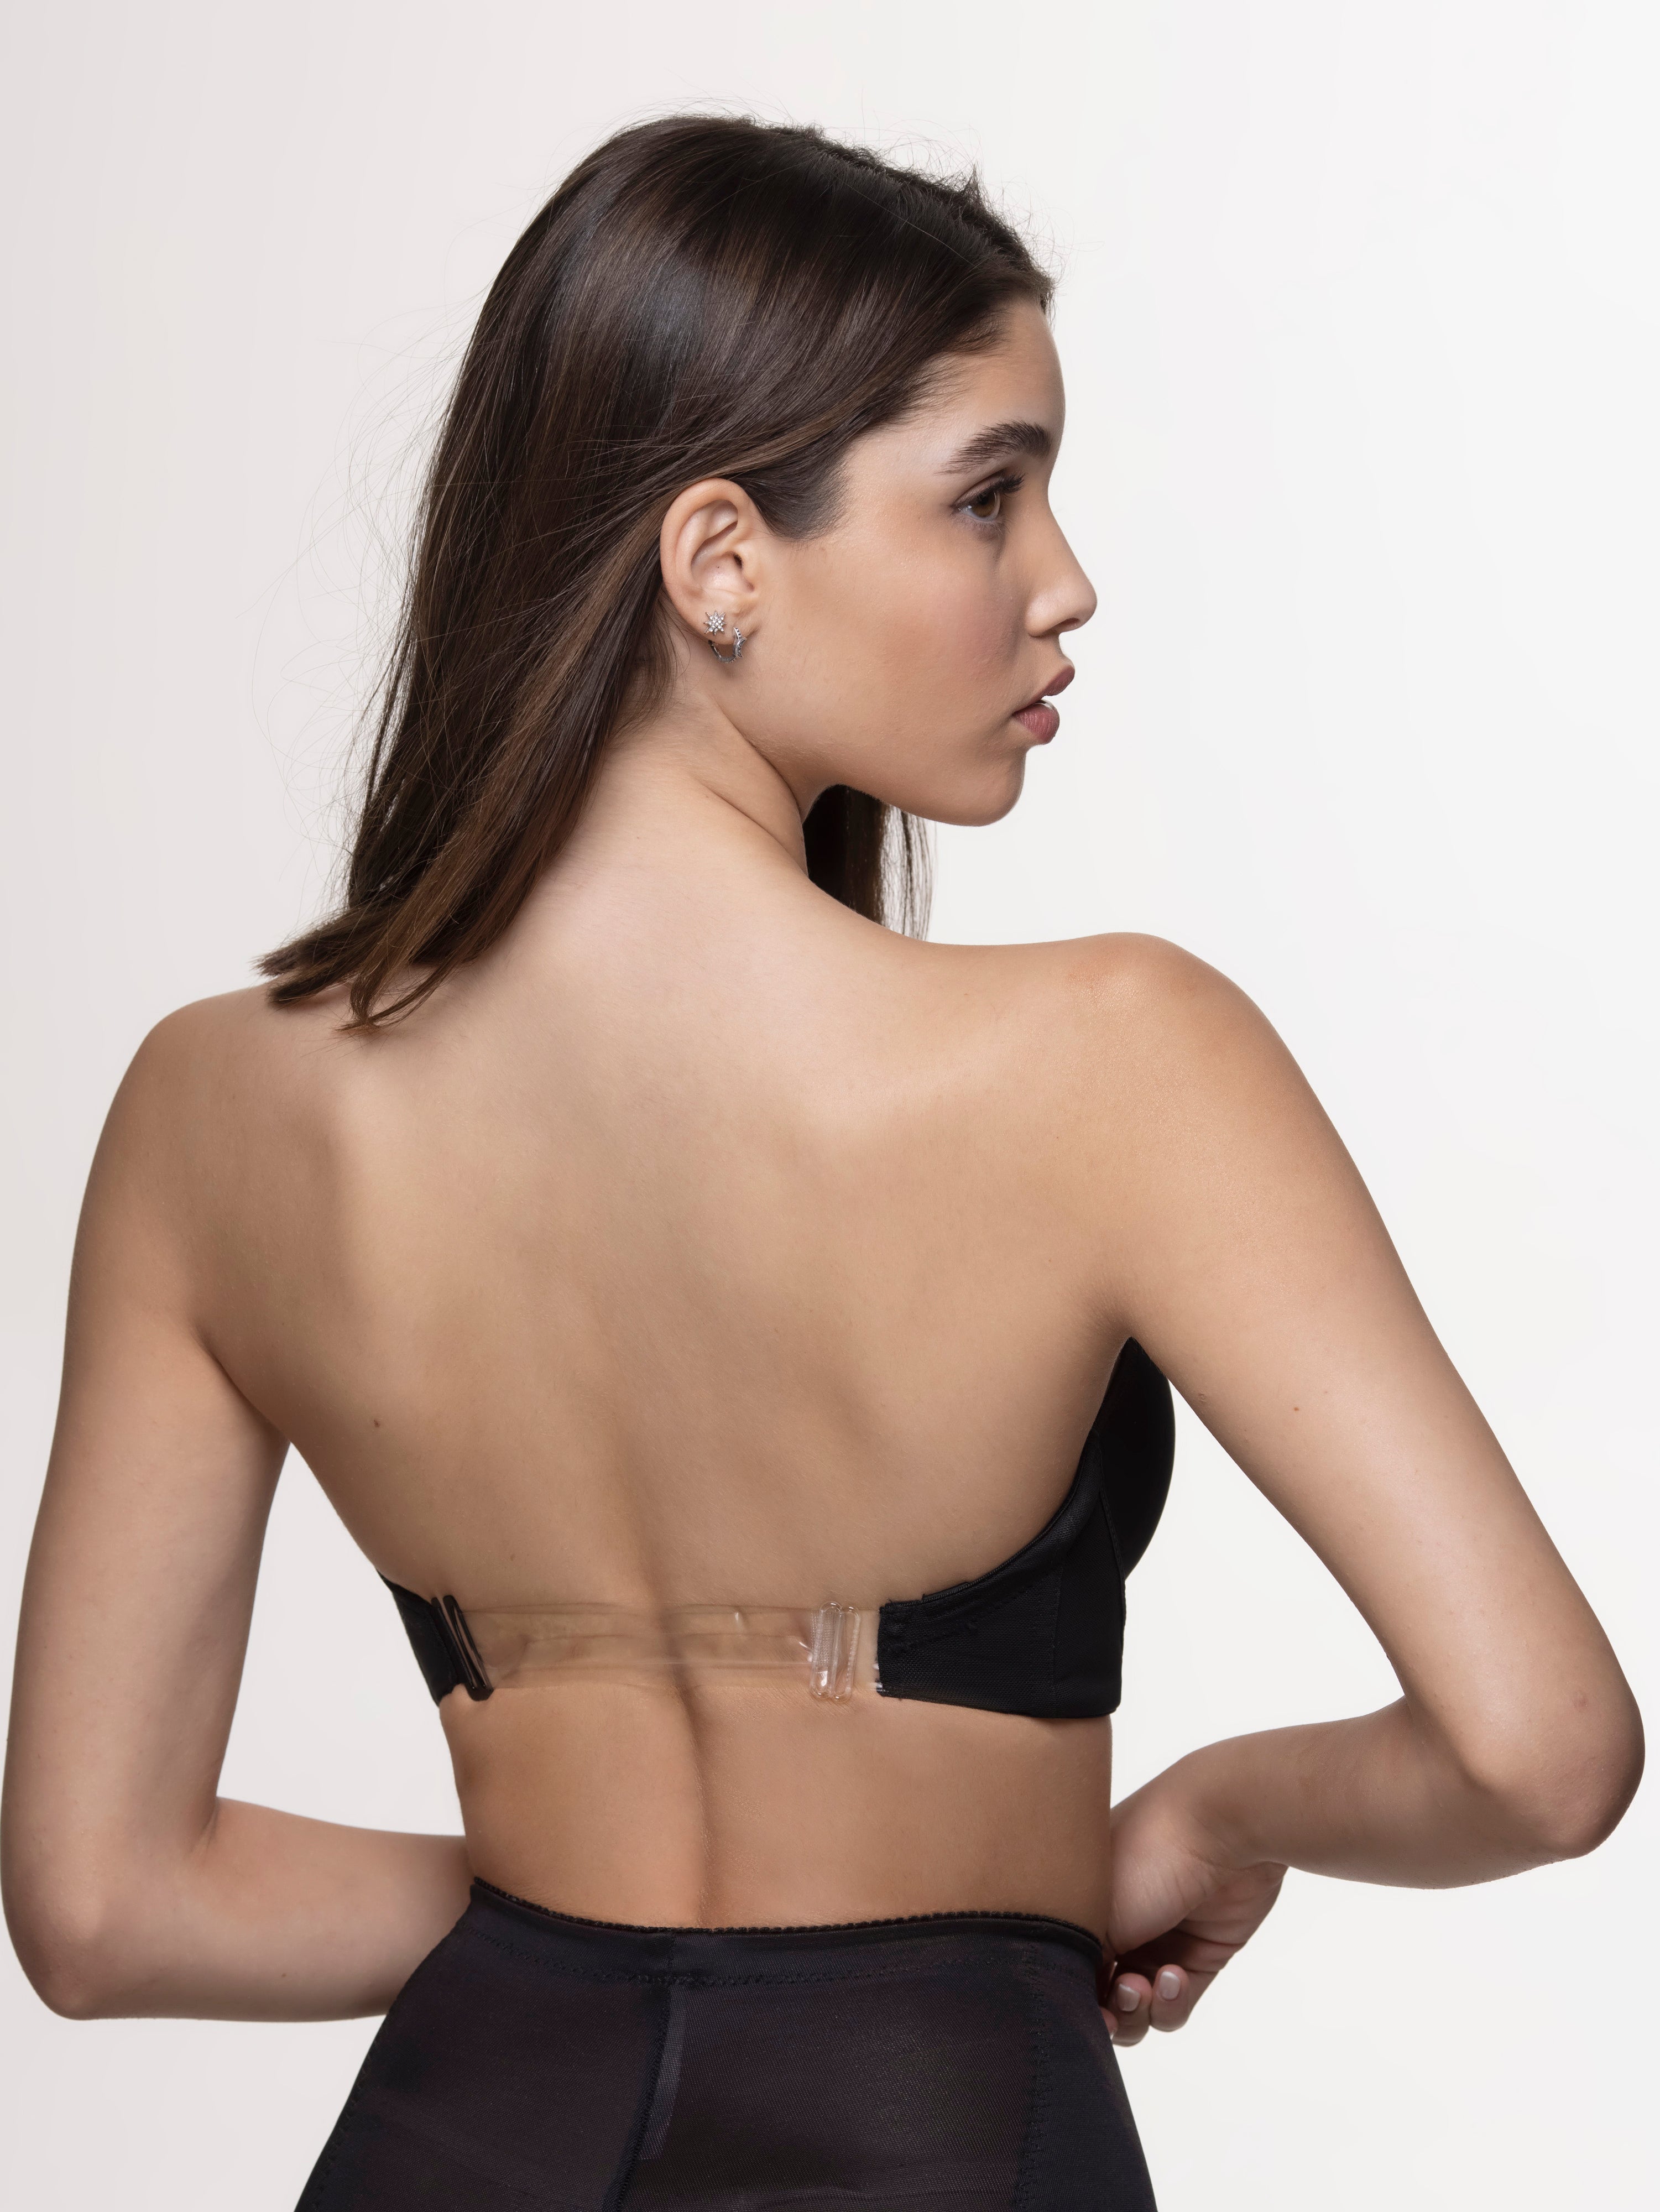 strapless back silicon חזיית סטרפלס מרופדת